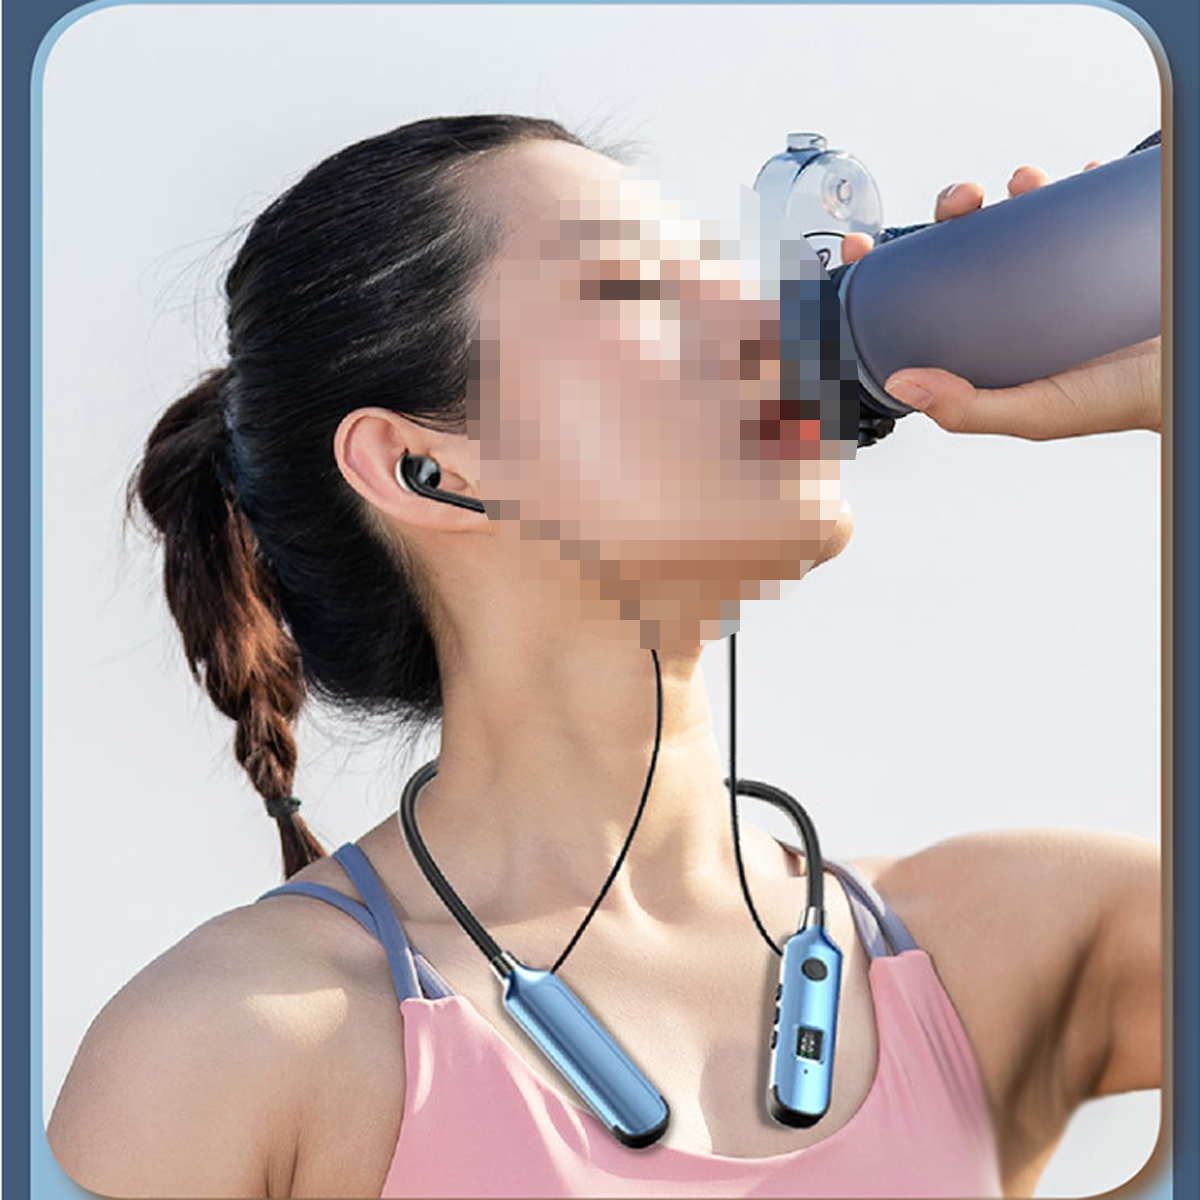 Headset - Soundkarte, Bluetooth drahtlose Headset Blau mit drahtlose ENBAOXIN Drahtloses Fernbedienung, In-ear Kopfhörer